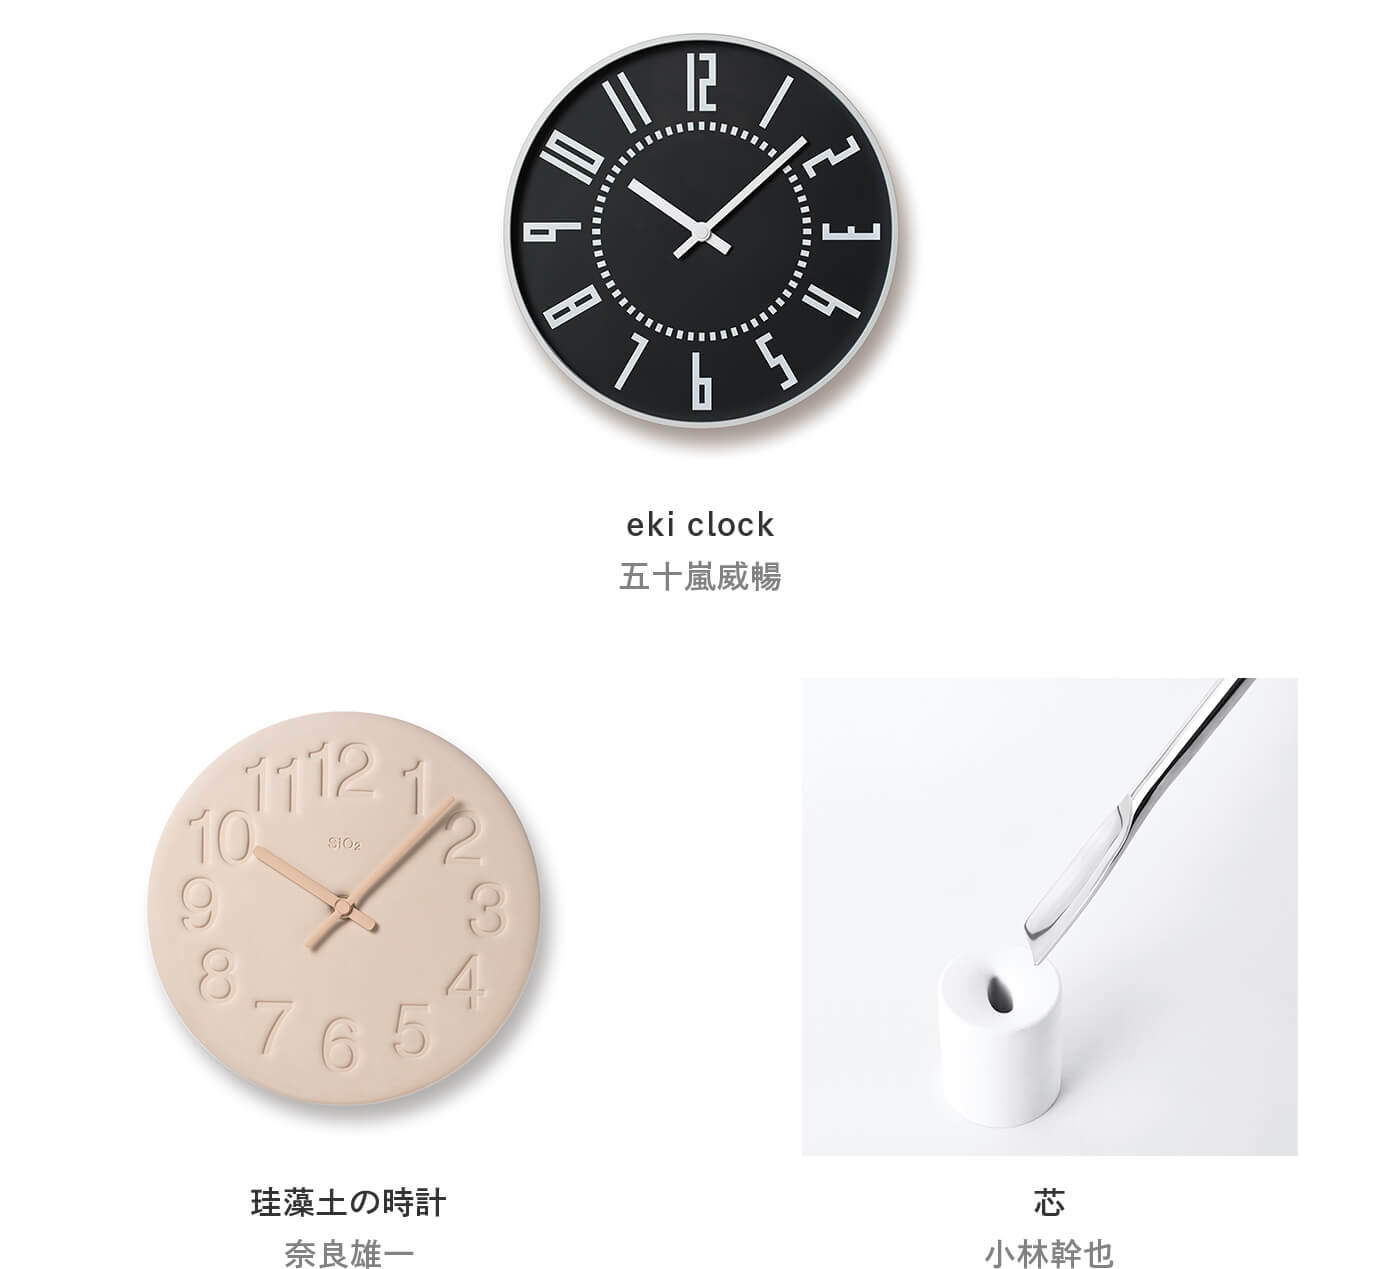 eki clock Designed by Igarashi Takenobu、珪藻土の時計 Designed by Yuichi Nara、芯 Designed by KOBAYASHI MIKIYA